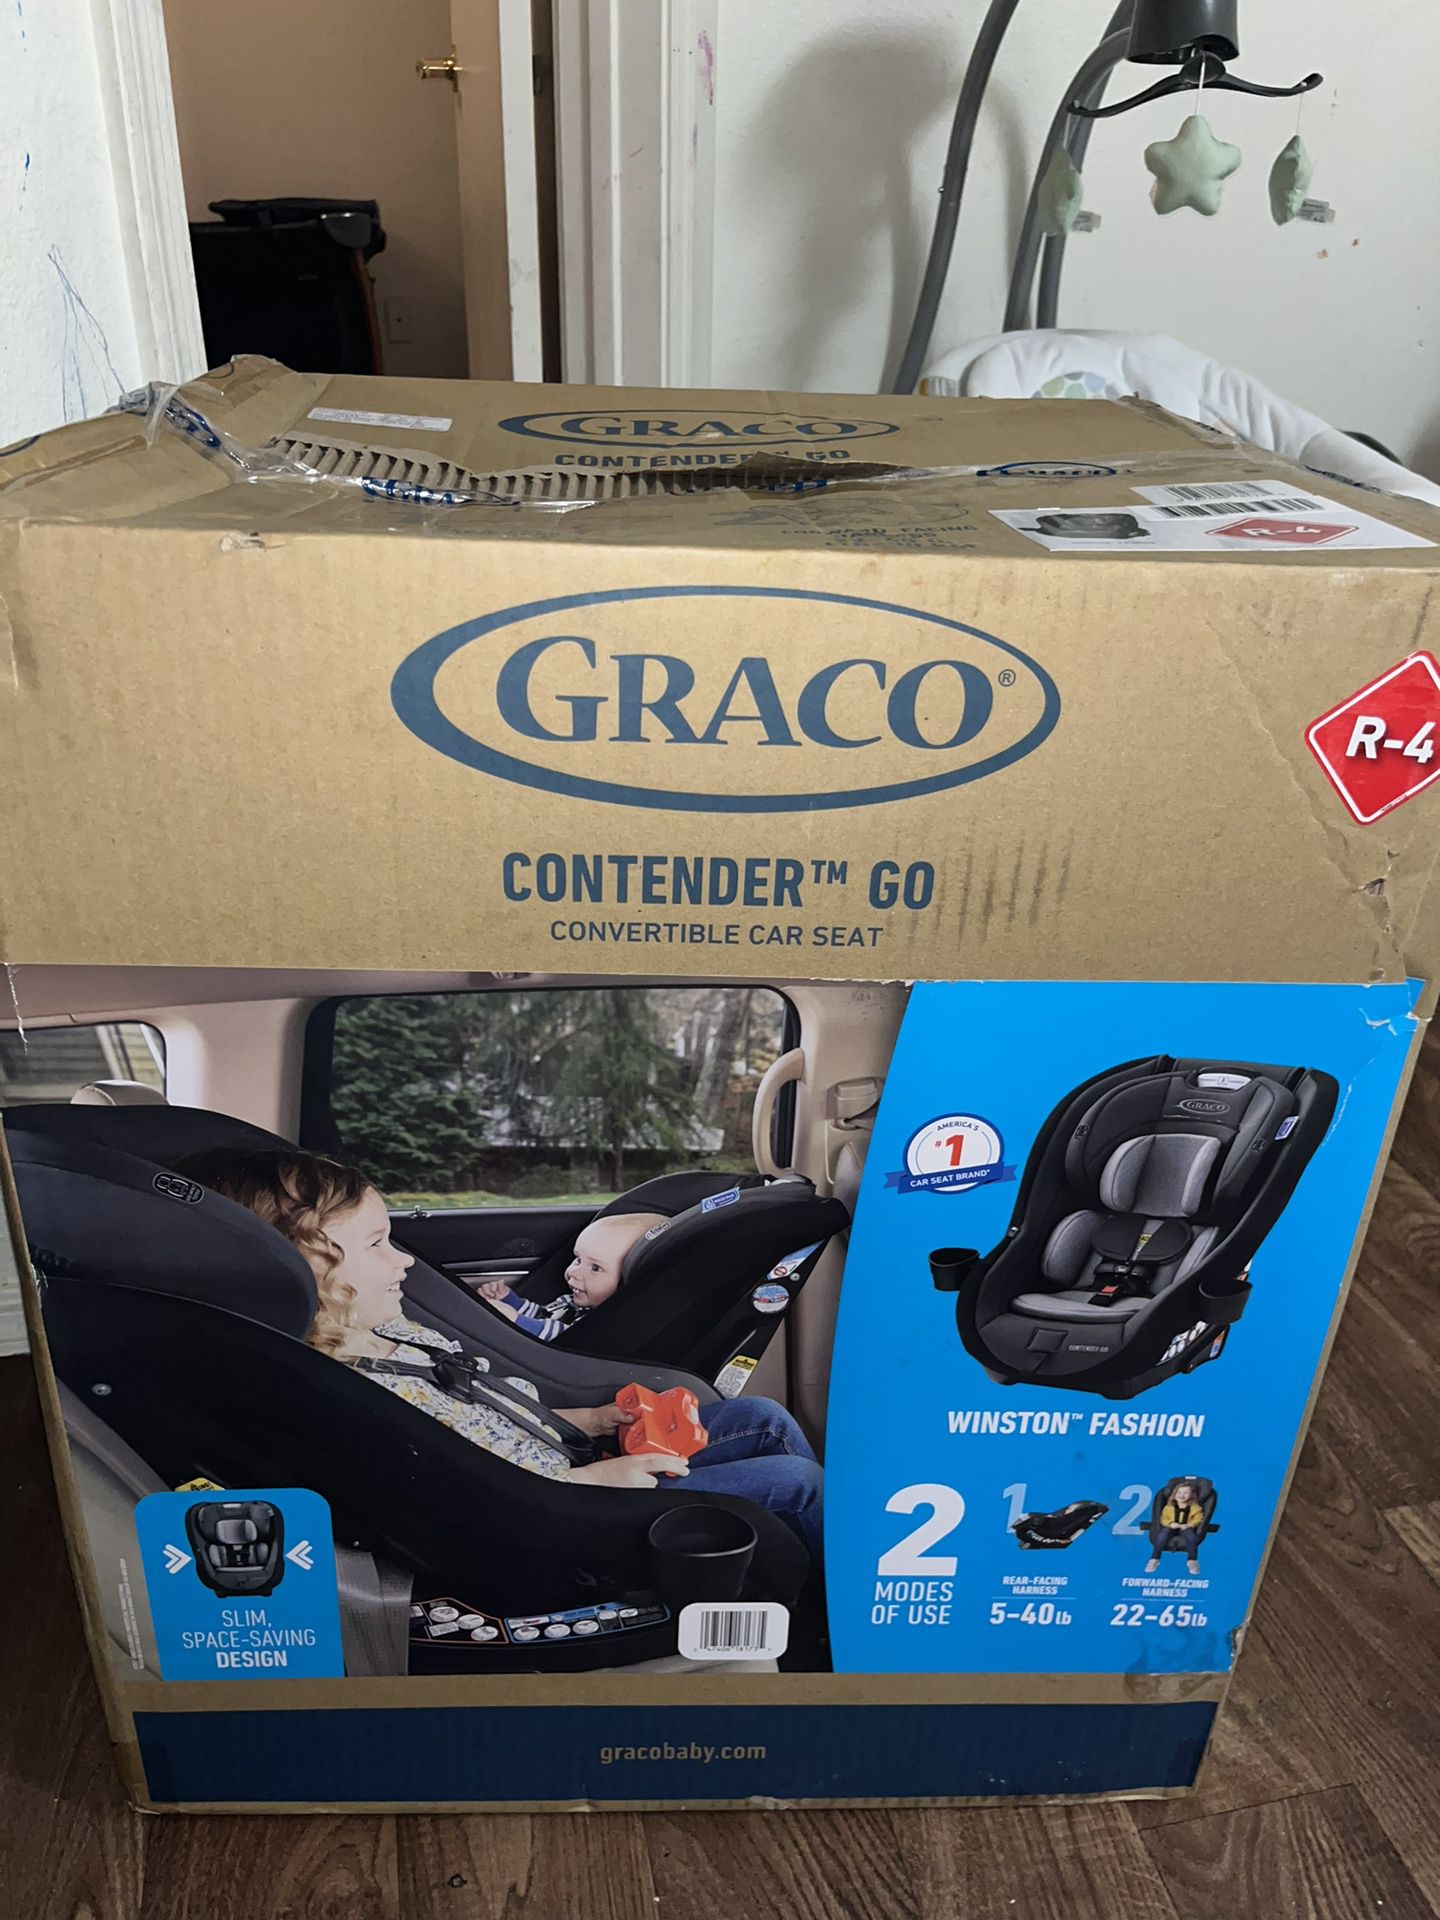 Graco Contender Go Car Seat